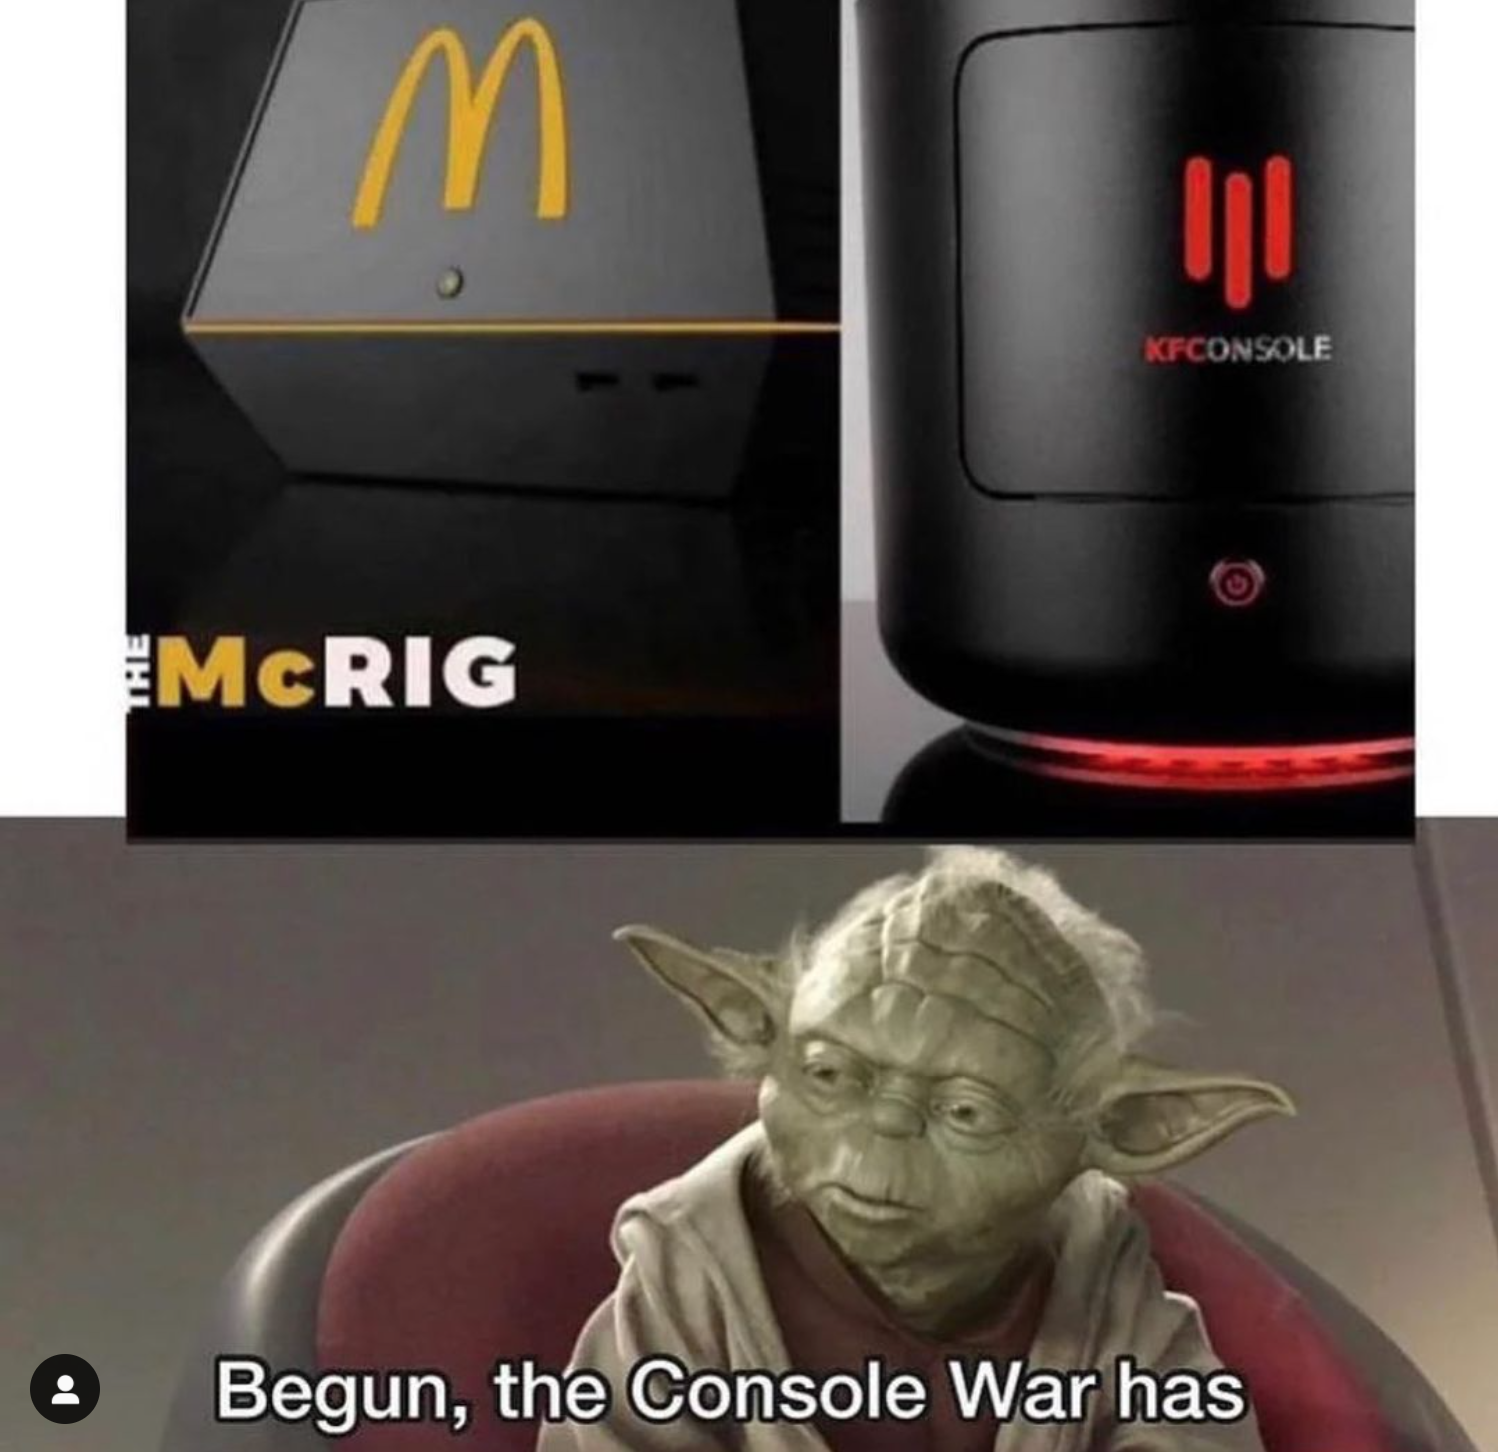 gaming memes - mc rig console mcdonalds - m E 00 Kfconsole McRIG Begun, the Console War has